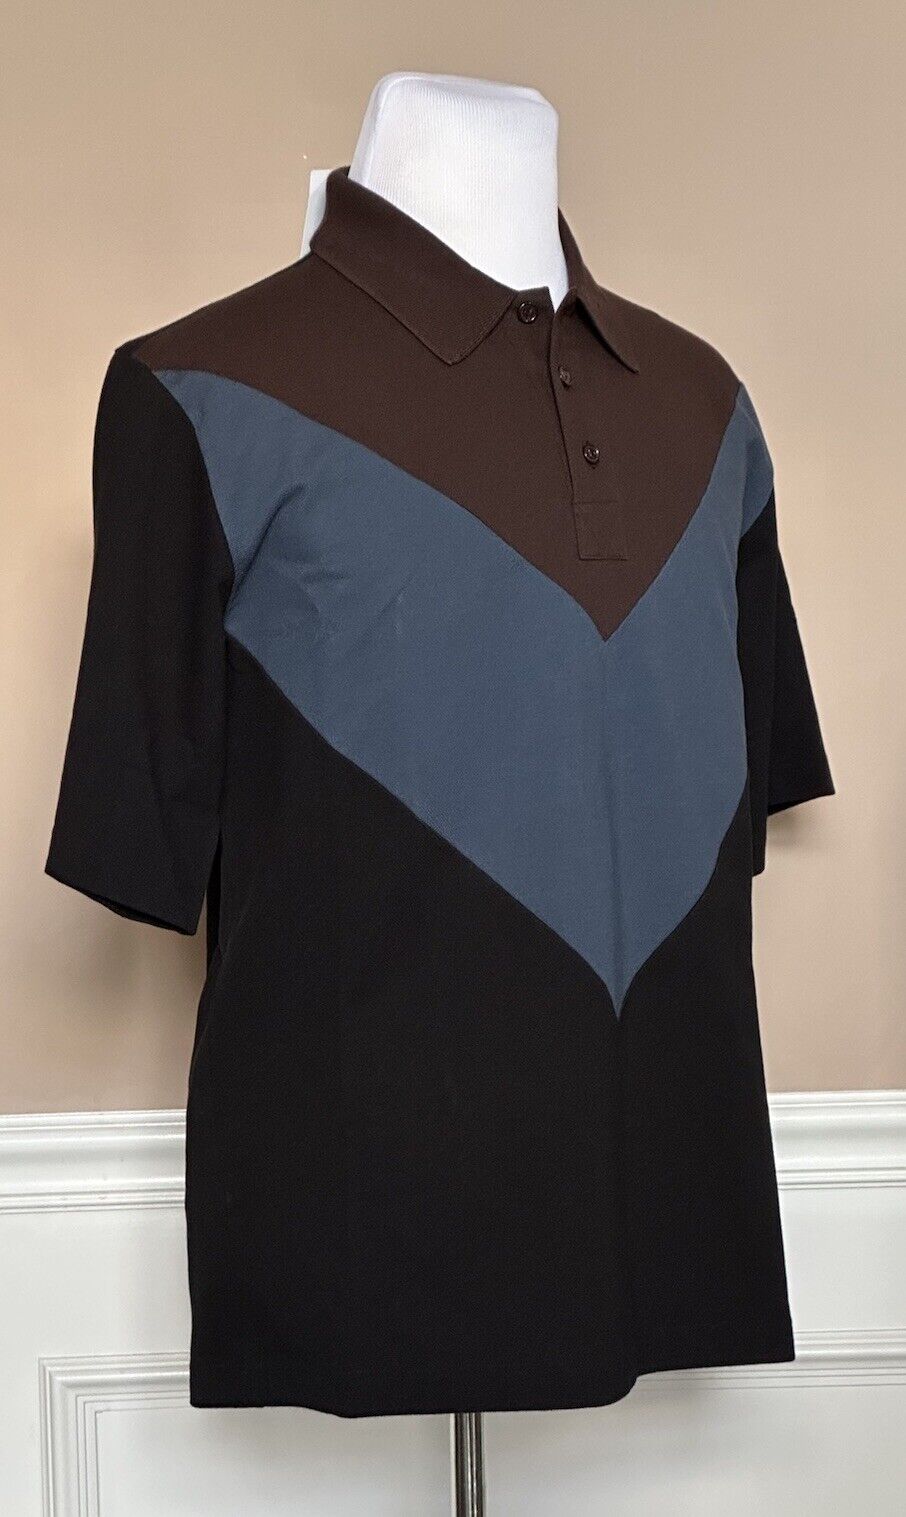 NWT 700 долларов США Bottega Veneta Разноцветная рубашка-поло из хлопка пике S (оверсайз) 704205 